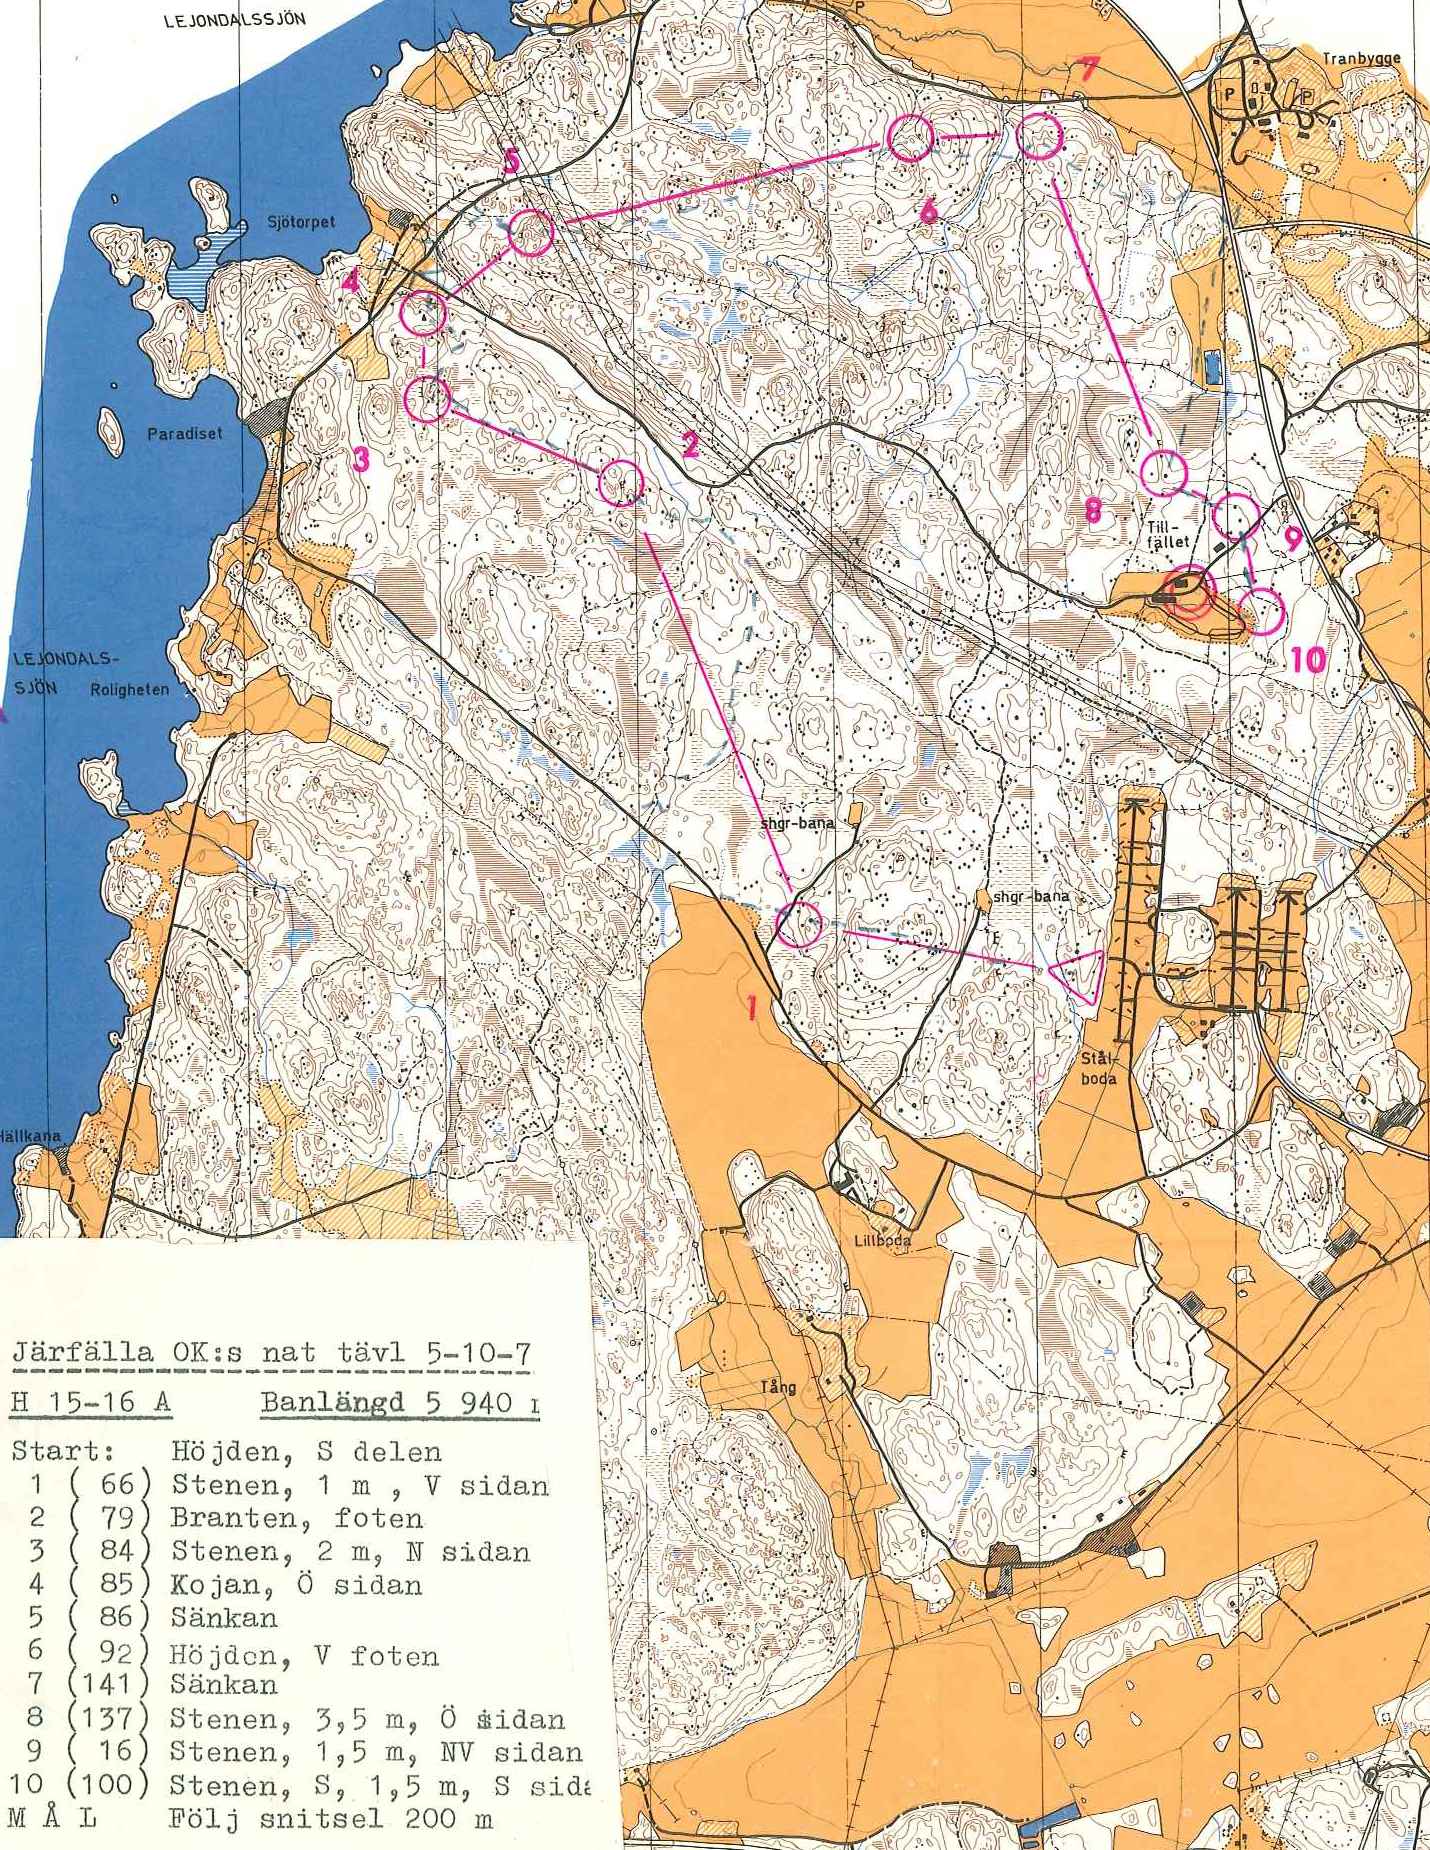 Järfälla (05-10-1975)